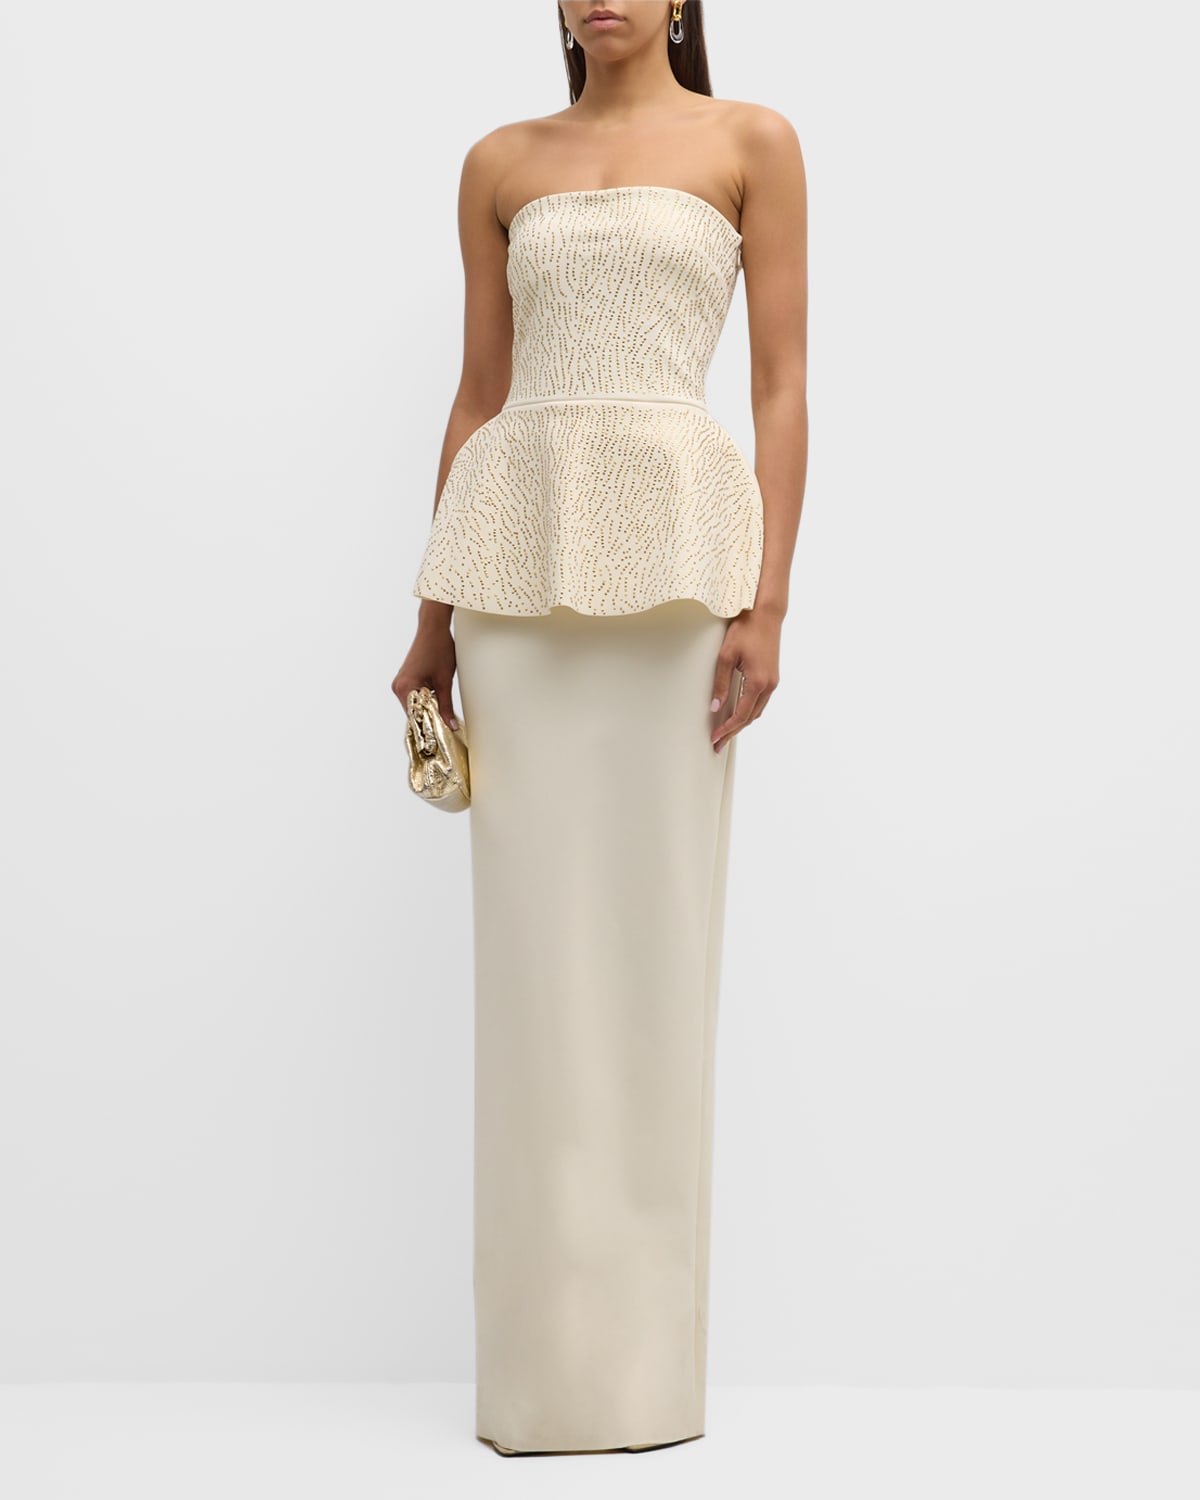 Chiara Boni La Petite Robe Studded Strapless Peplum Column Gown In Cream